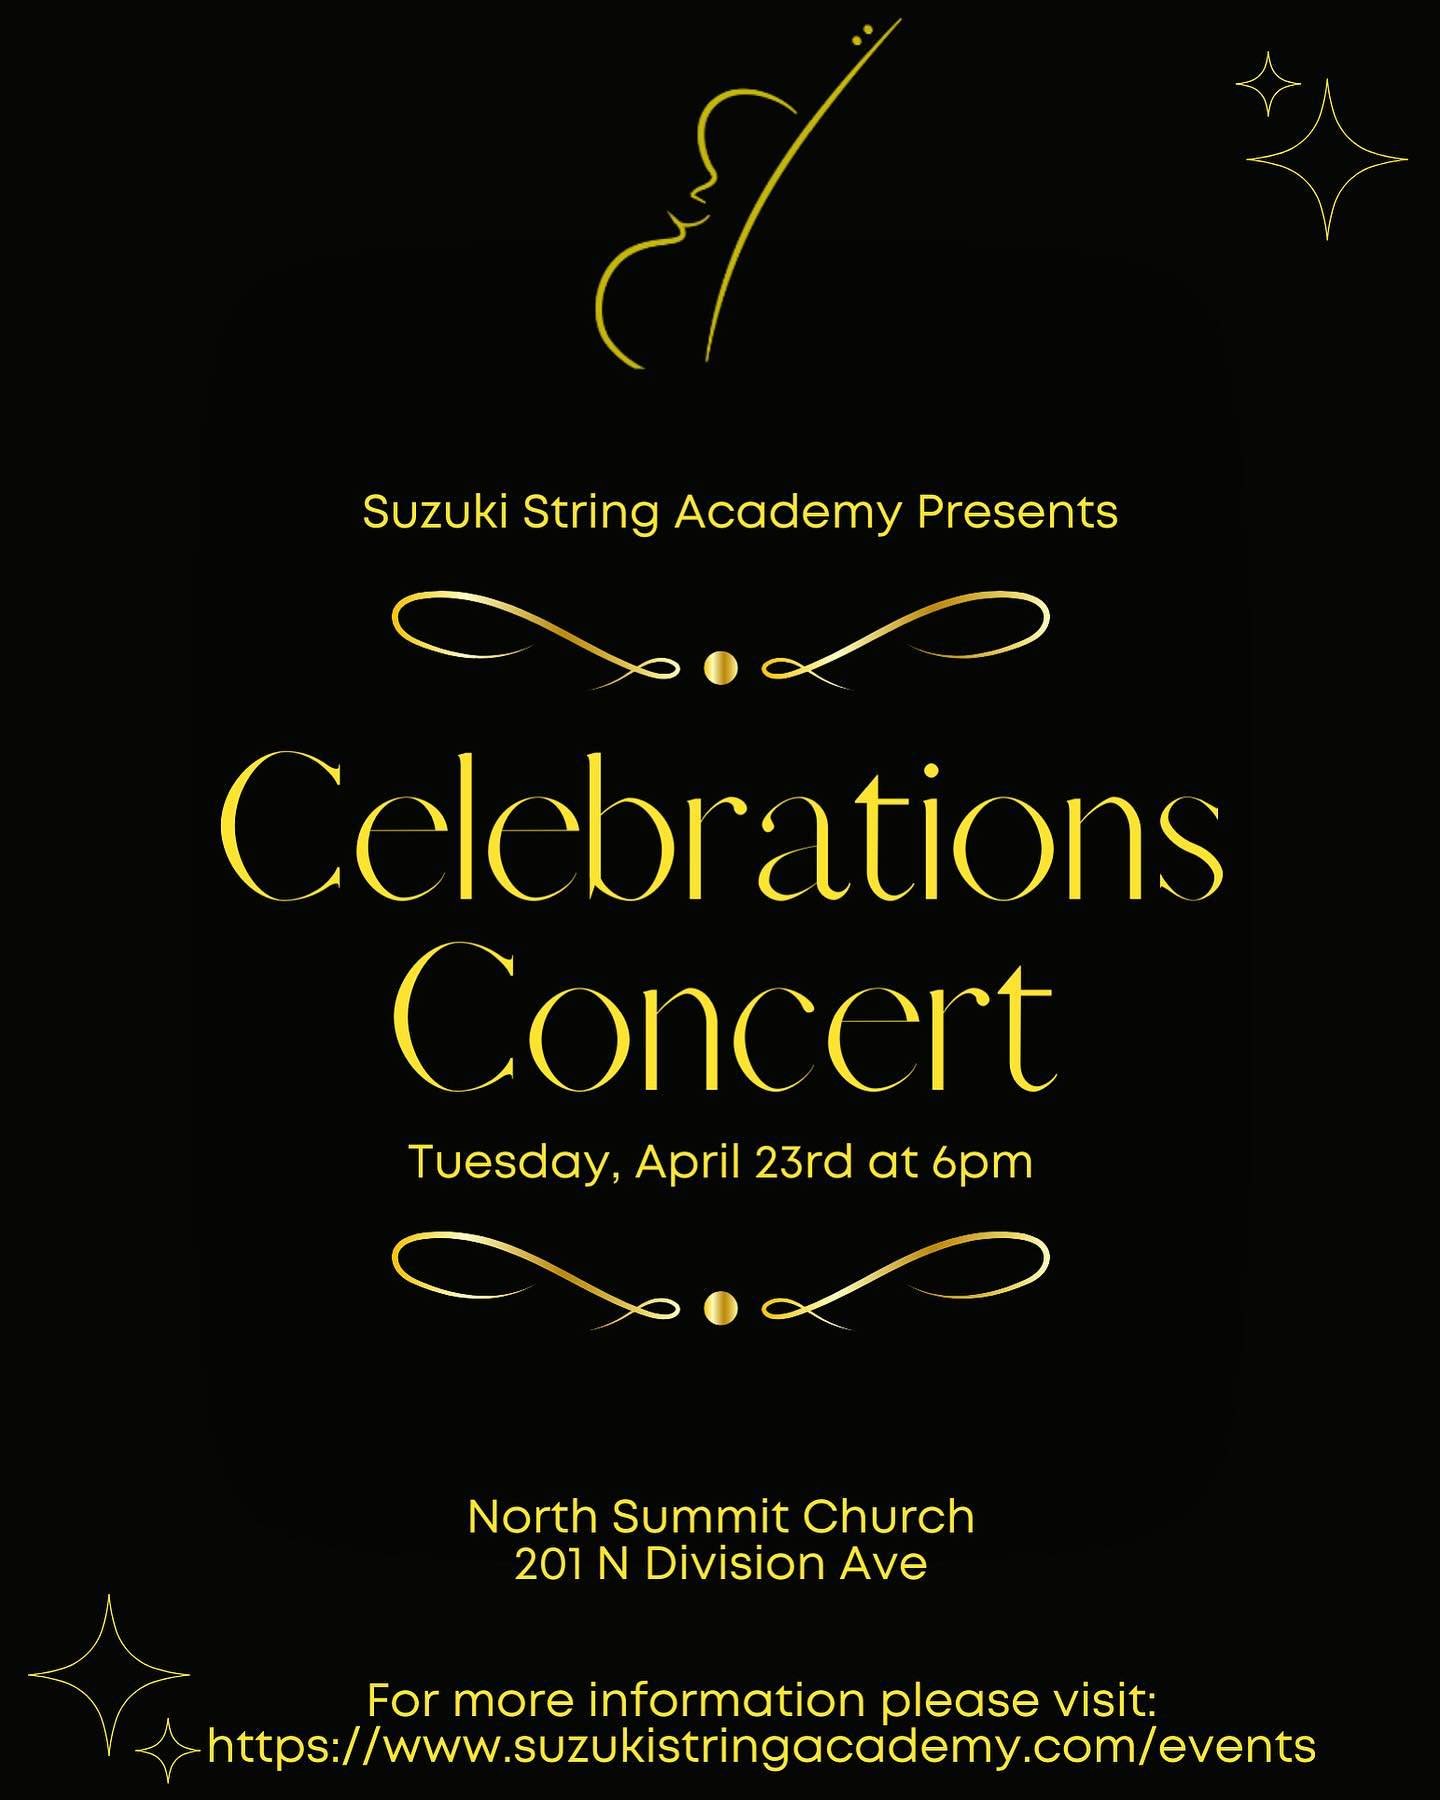 Tonight Tuesday April 23 6pm North Summit Church.

#freeconcert #stringsconcert #suzukiconcert #livemusic #familyconcert #sandpoint #sandpointidaho #sandpointliving